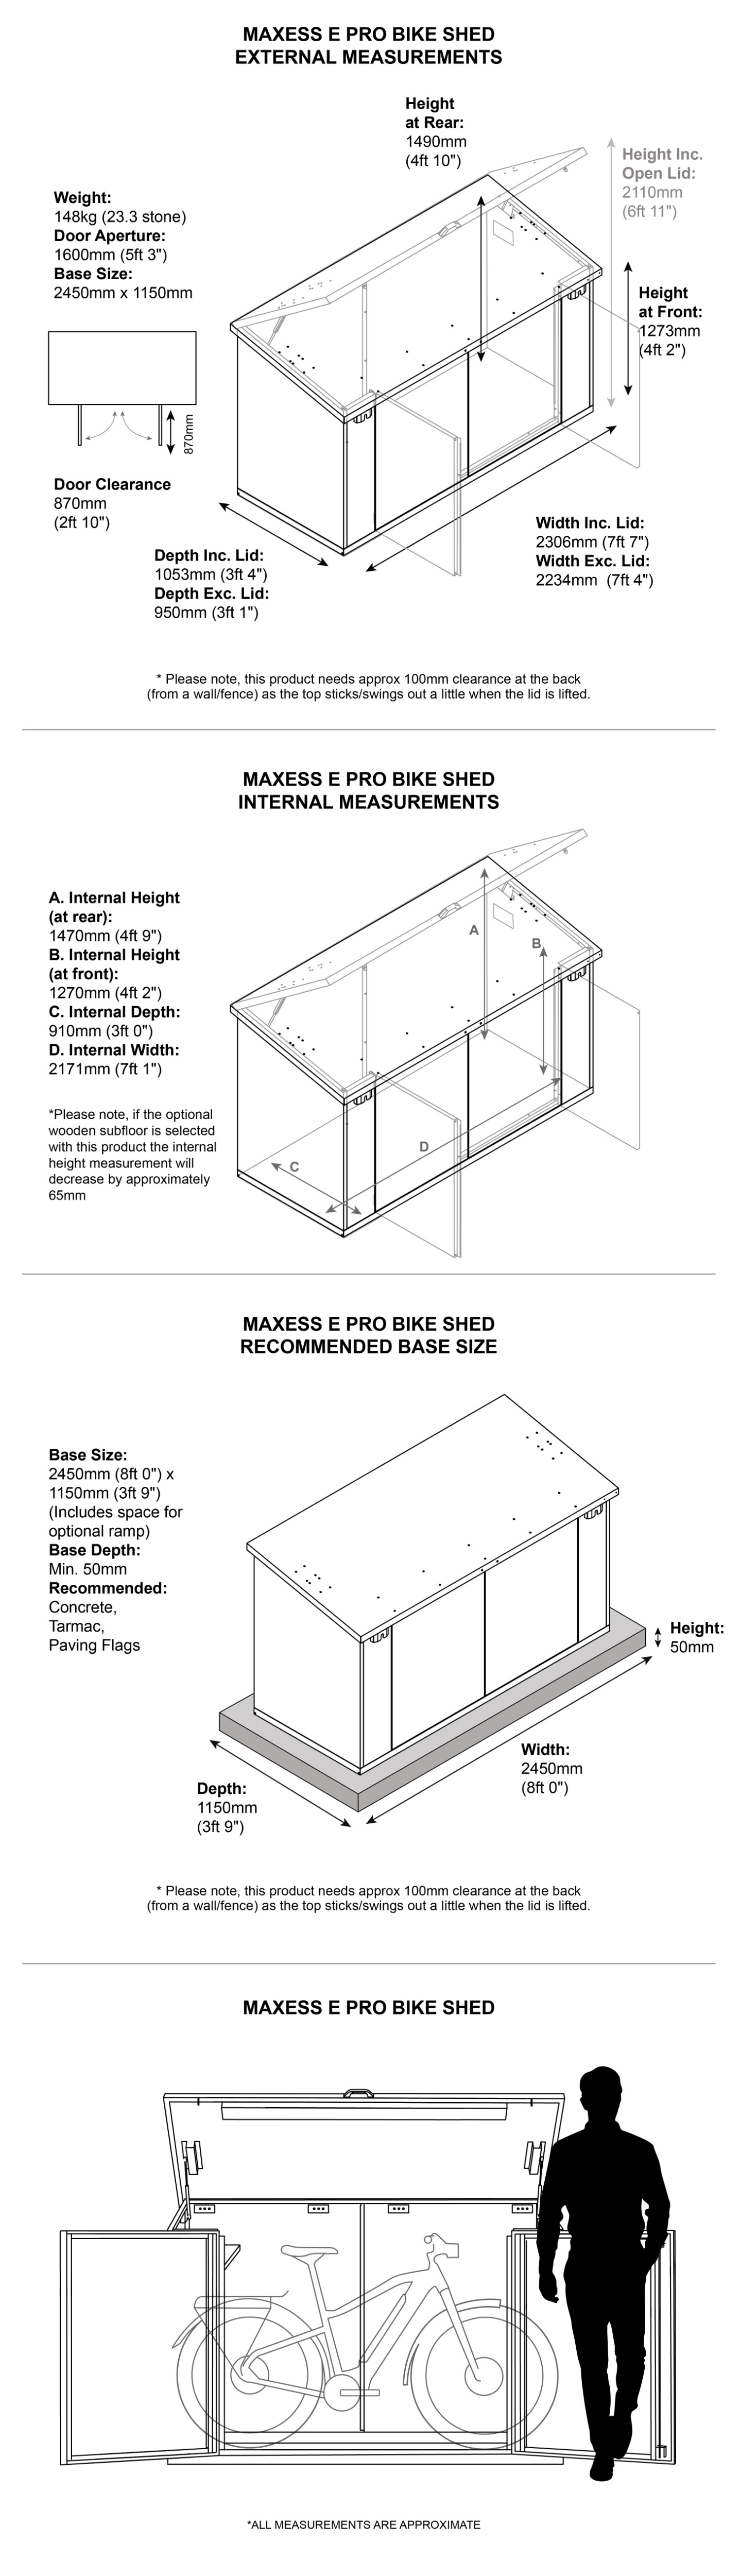 Maxess Ebike Storage Shed - Dimensions